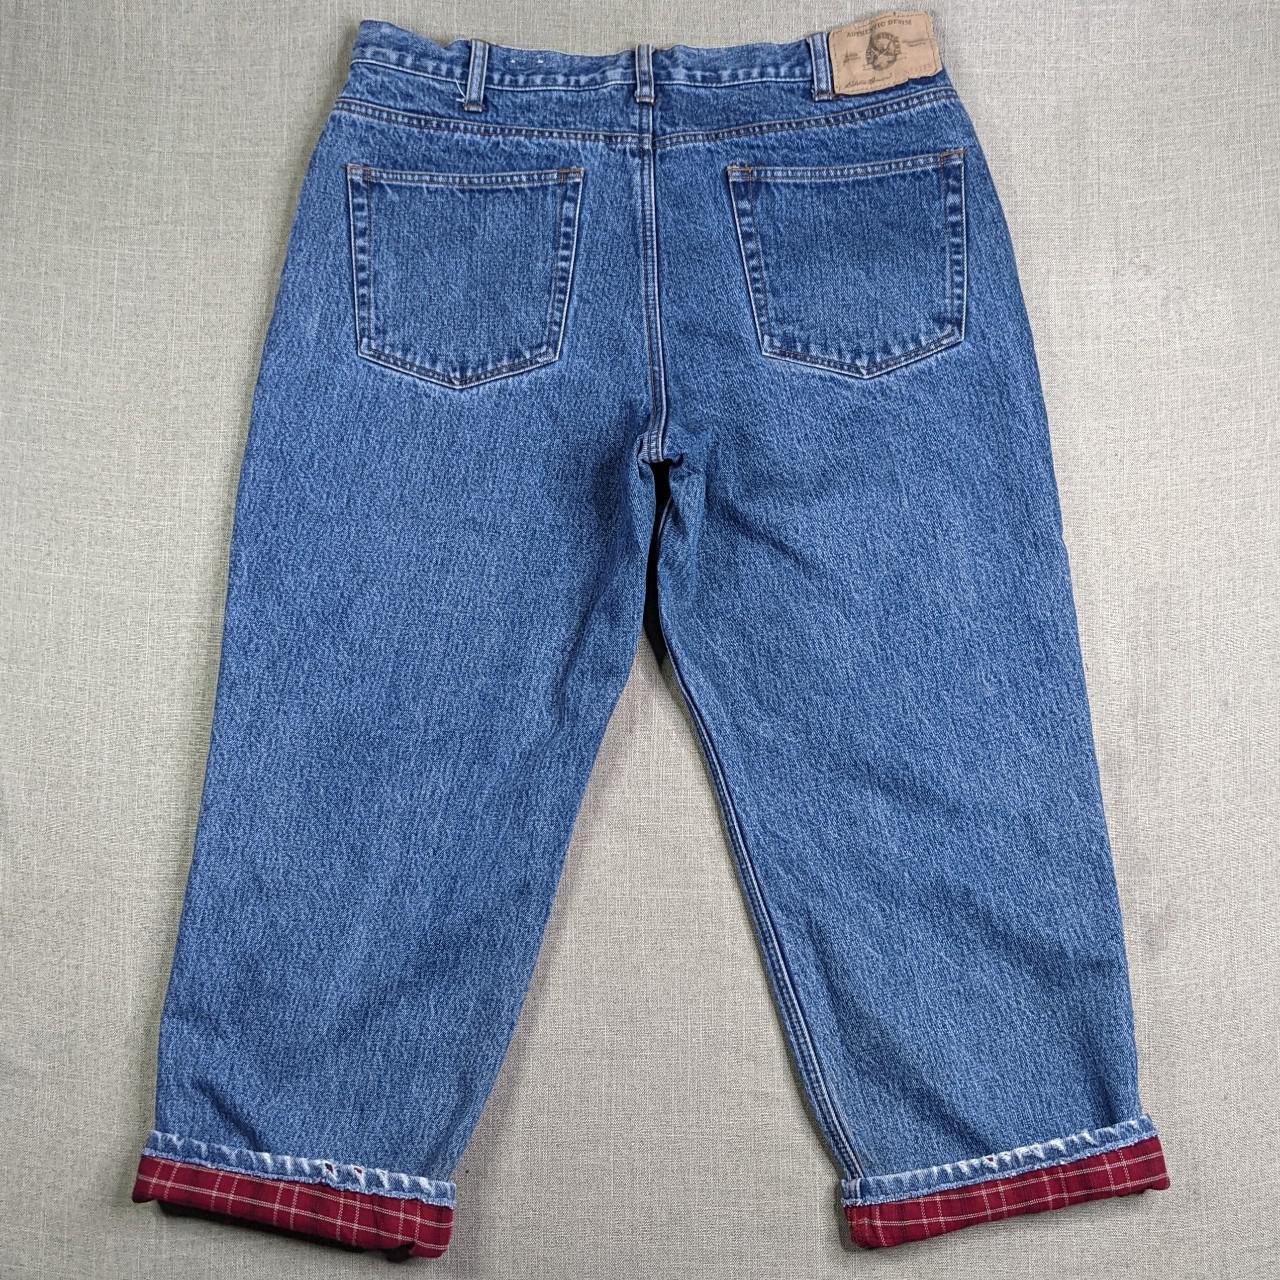 Product Image 2 - Vintage flannel jeans by Eddie